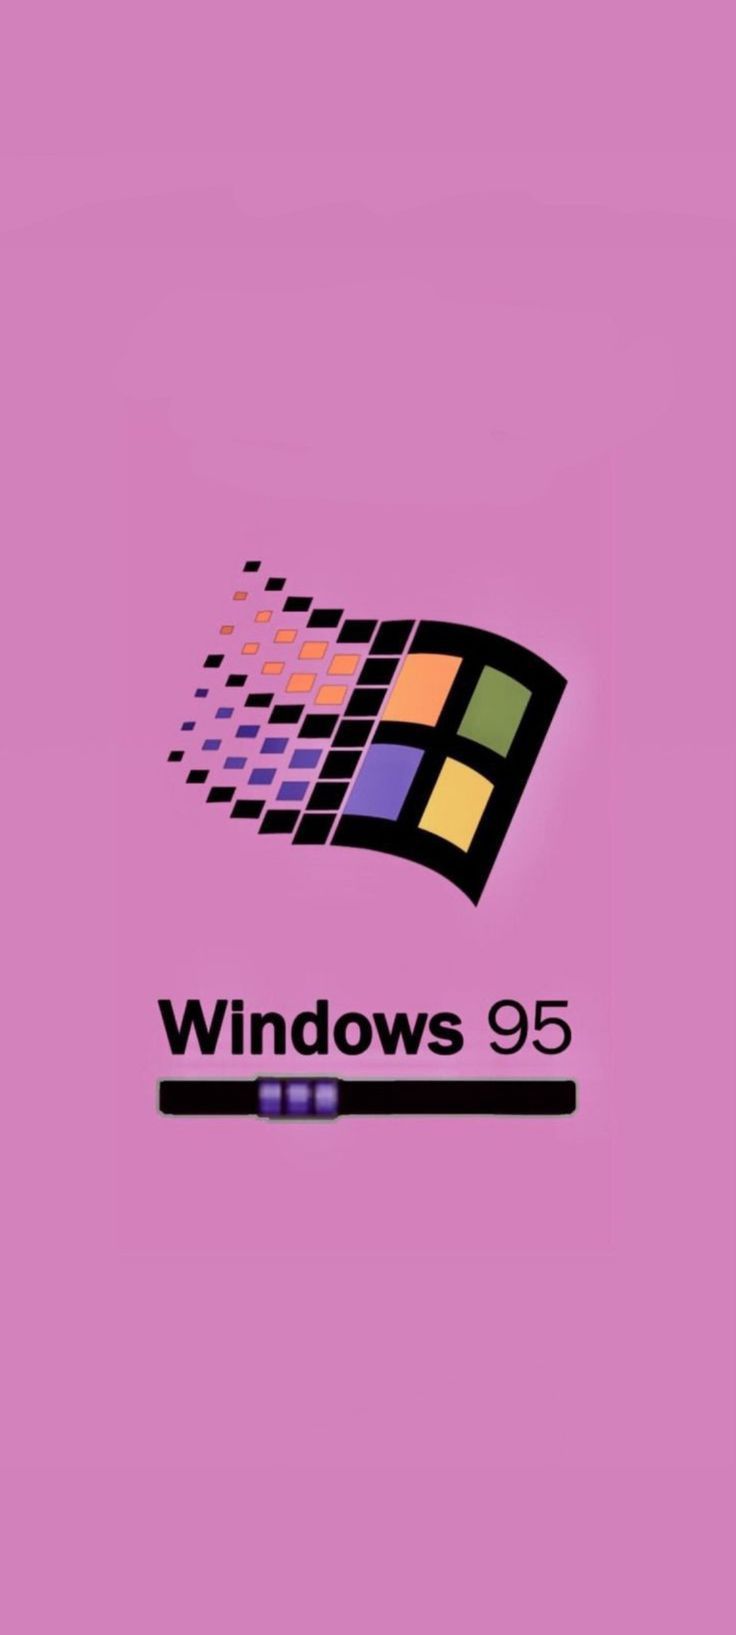 Windows 95 logo wallpaper - Windows 95